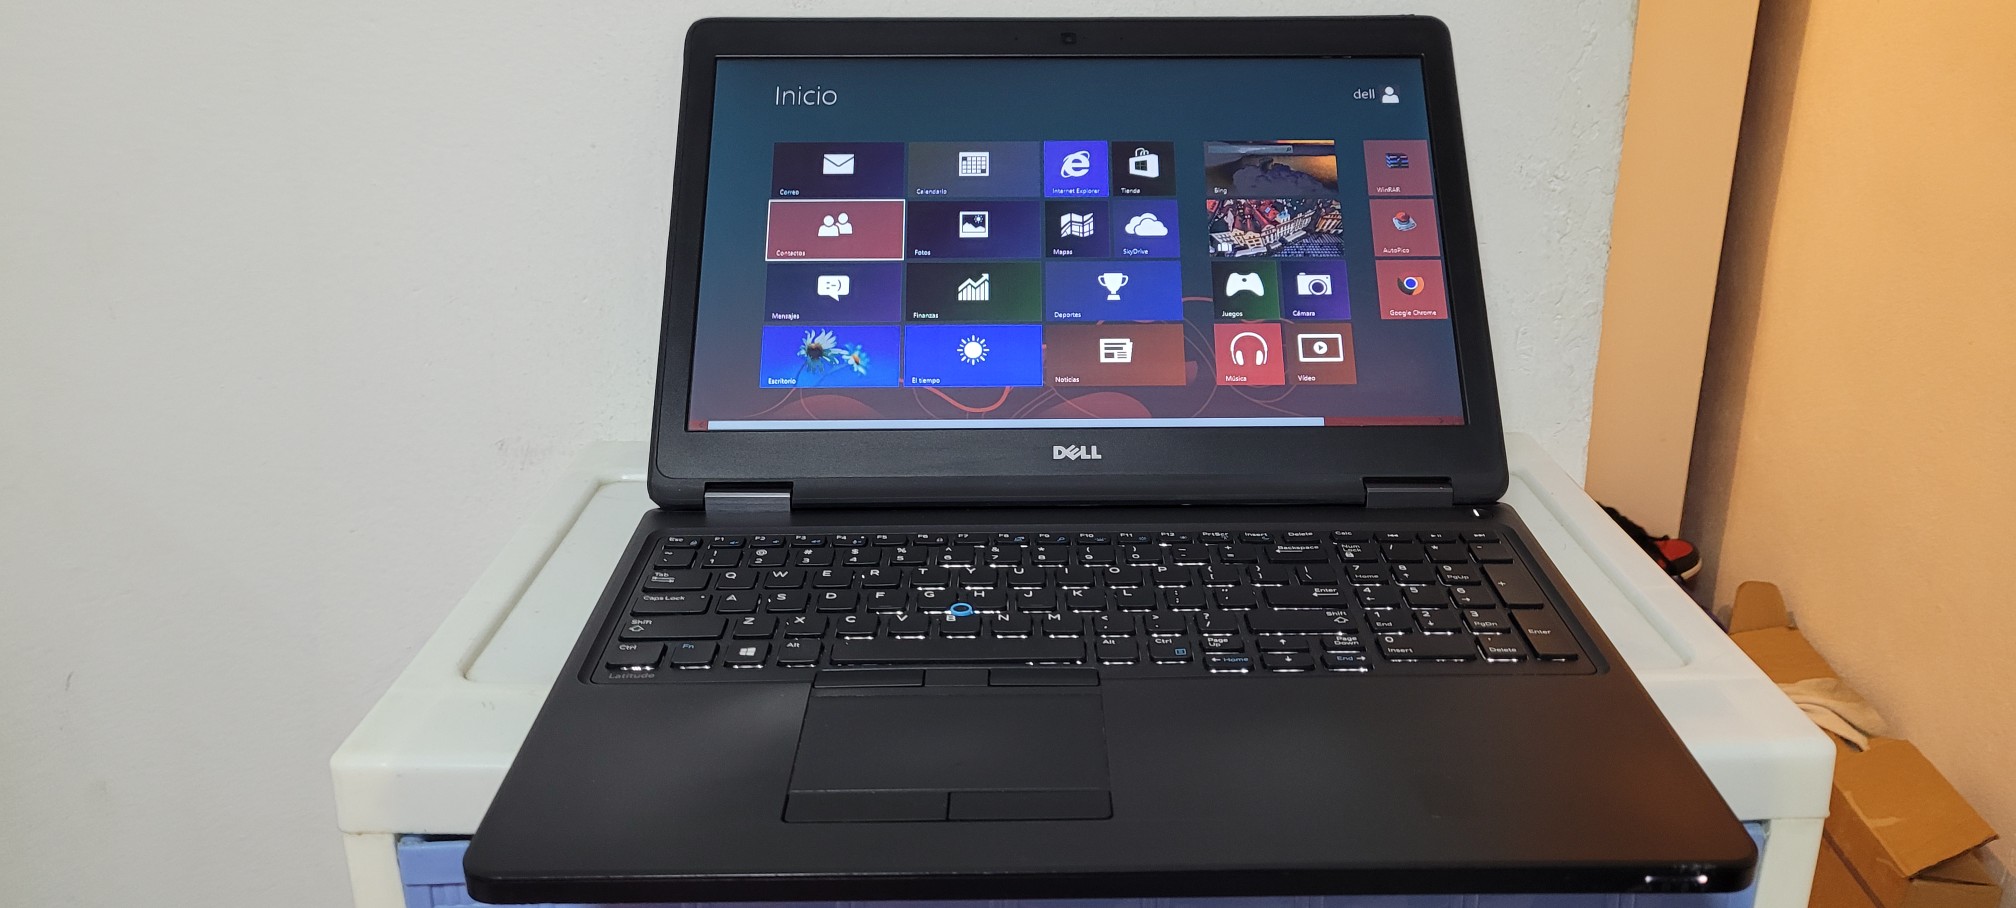 computadoras y laptops - Laptop Dell 17 Pulg Core i7 2.7ghz Ram 8gb Disco 1000gb hdmi